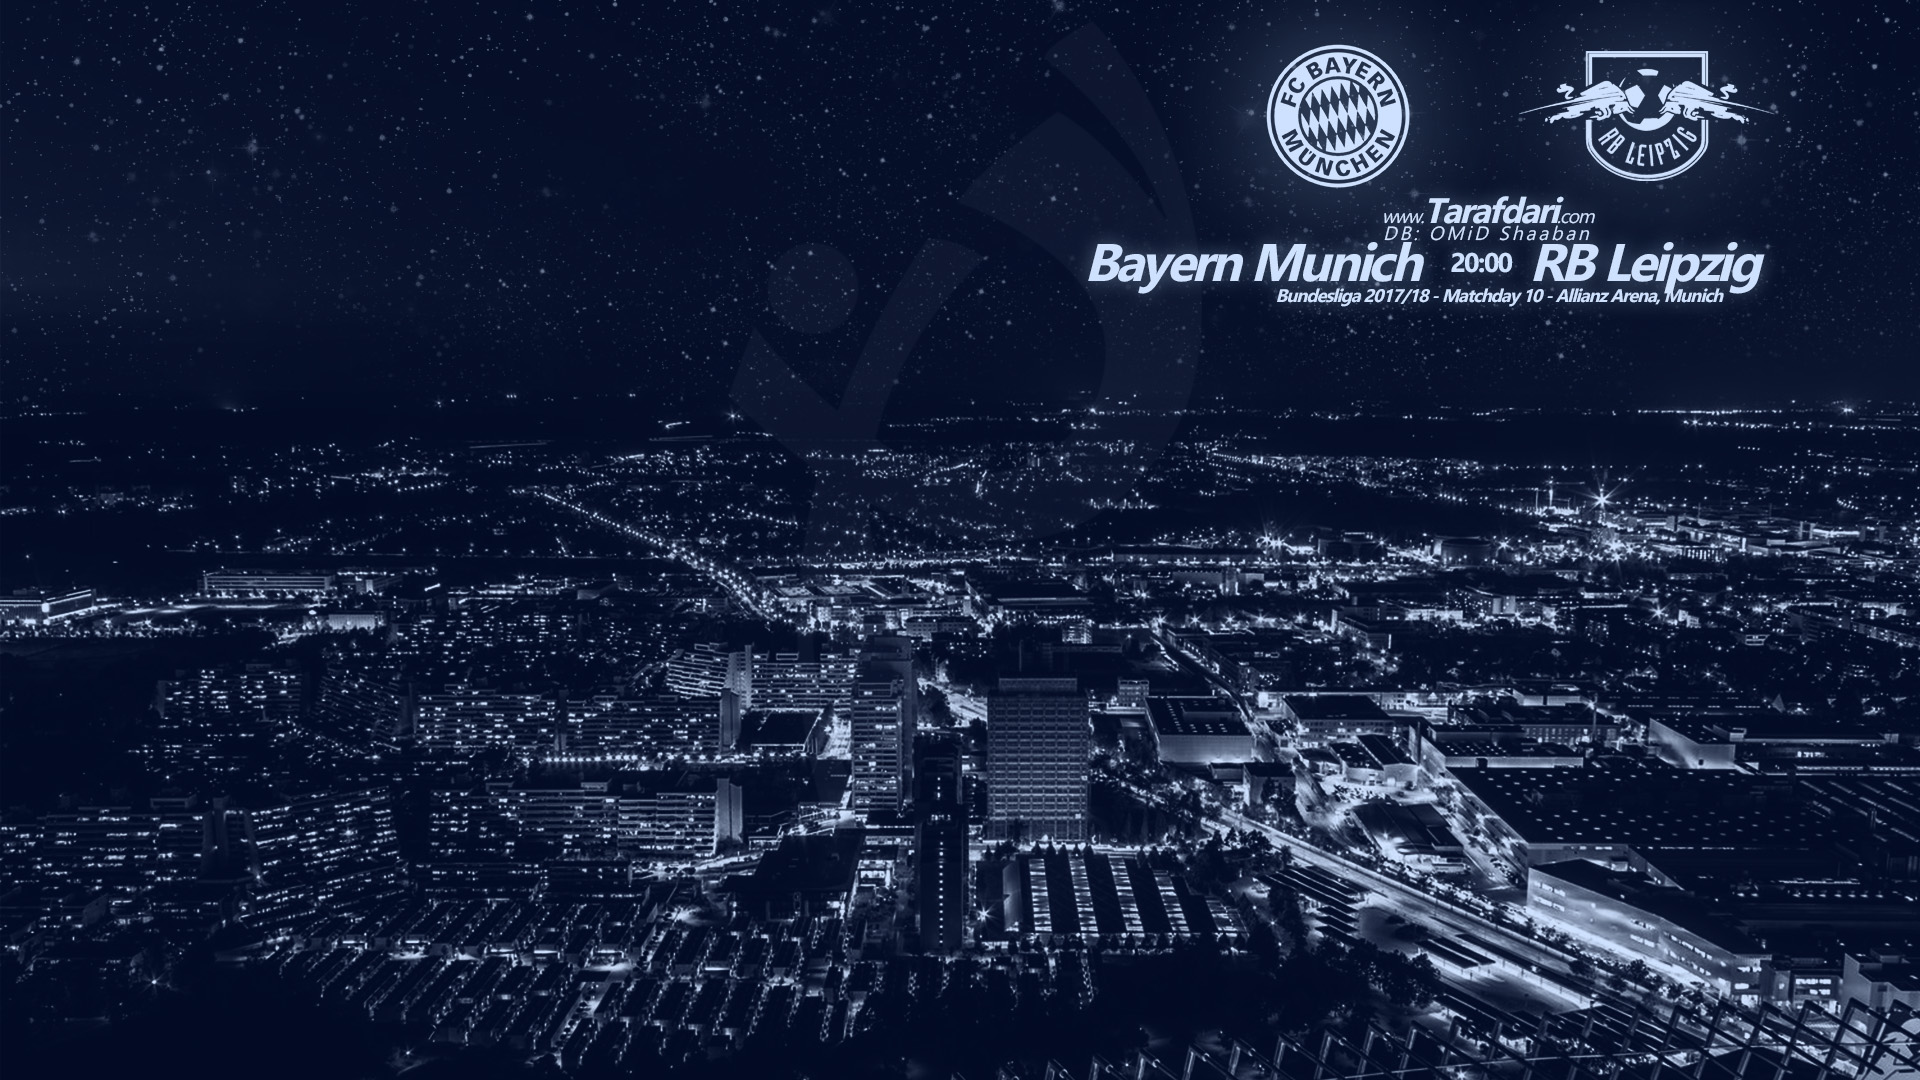 بایرن مونیخ-لایپزیش-هفته دهم-پیش بازی آماری-بوندس لیگا آلمان-شهر مونیخ